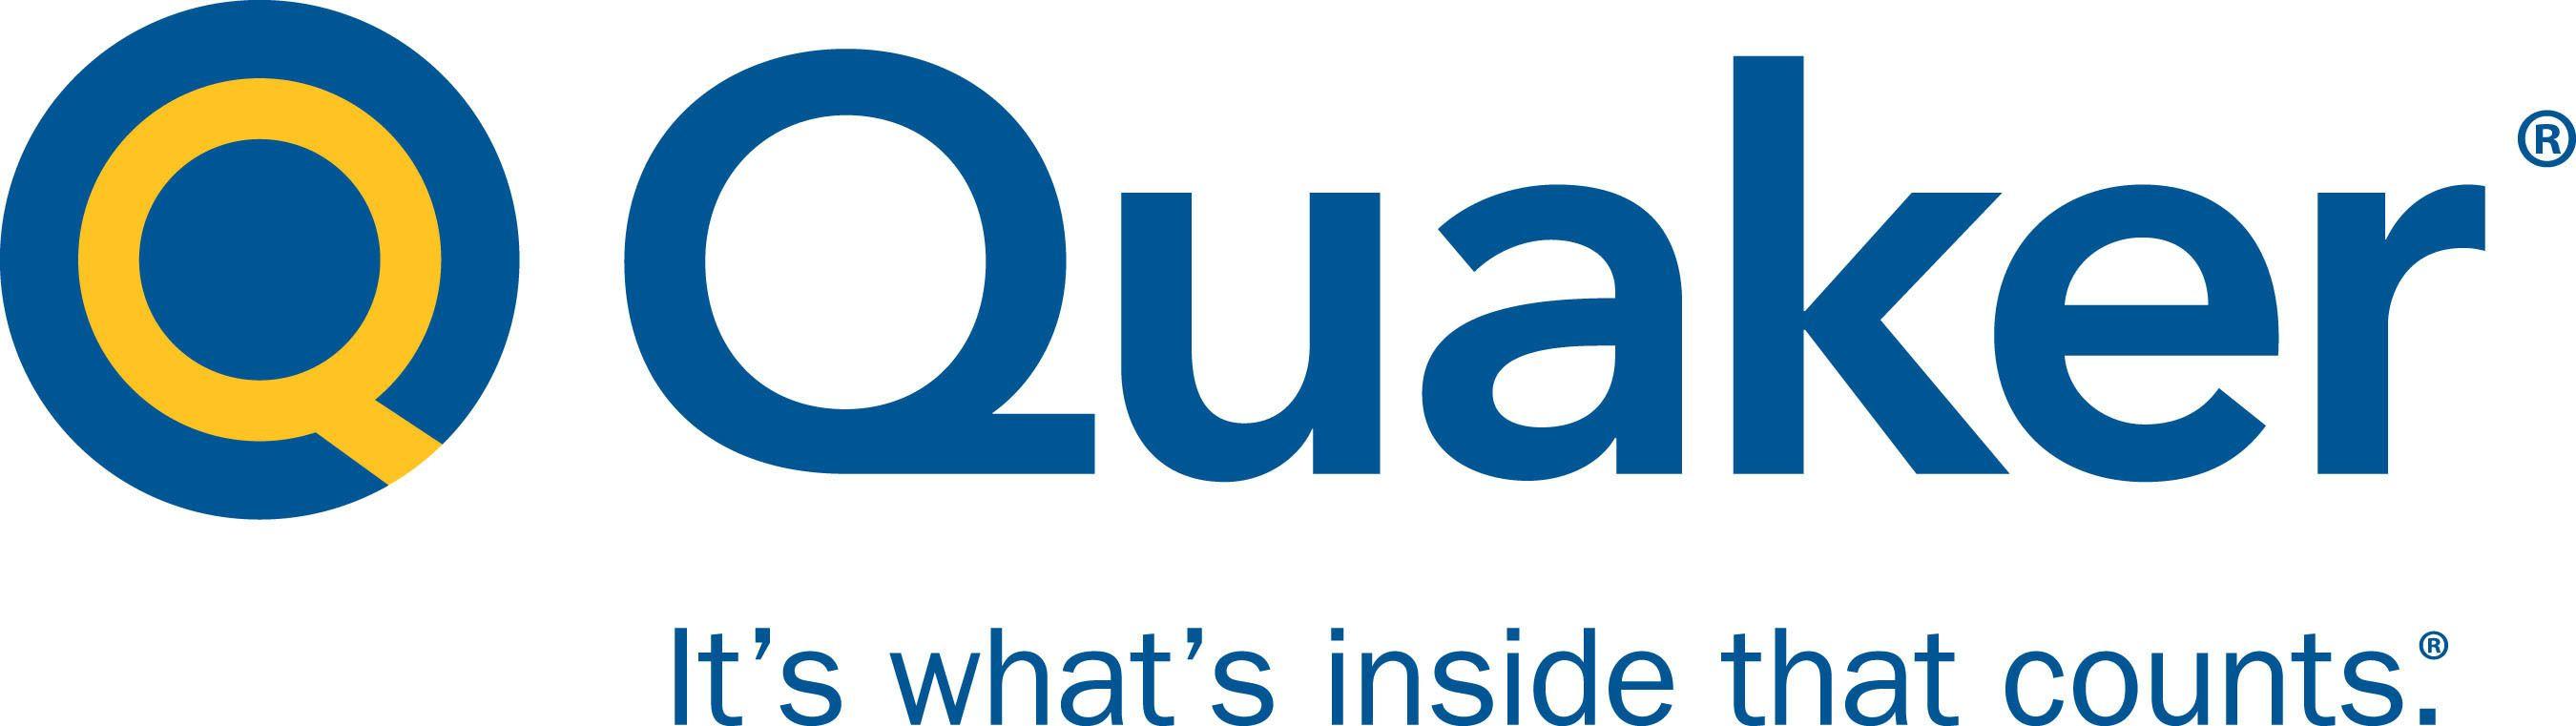 Quaker Logo - Quaker Acquires Lubricor Inc. Canadian Metalworking Fluids Business